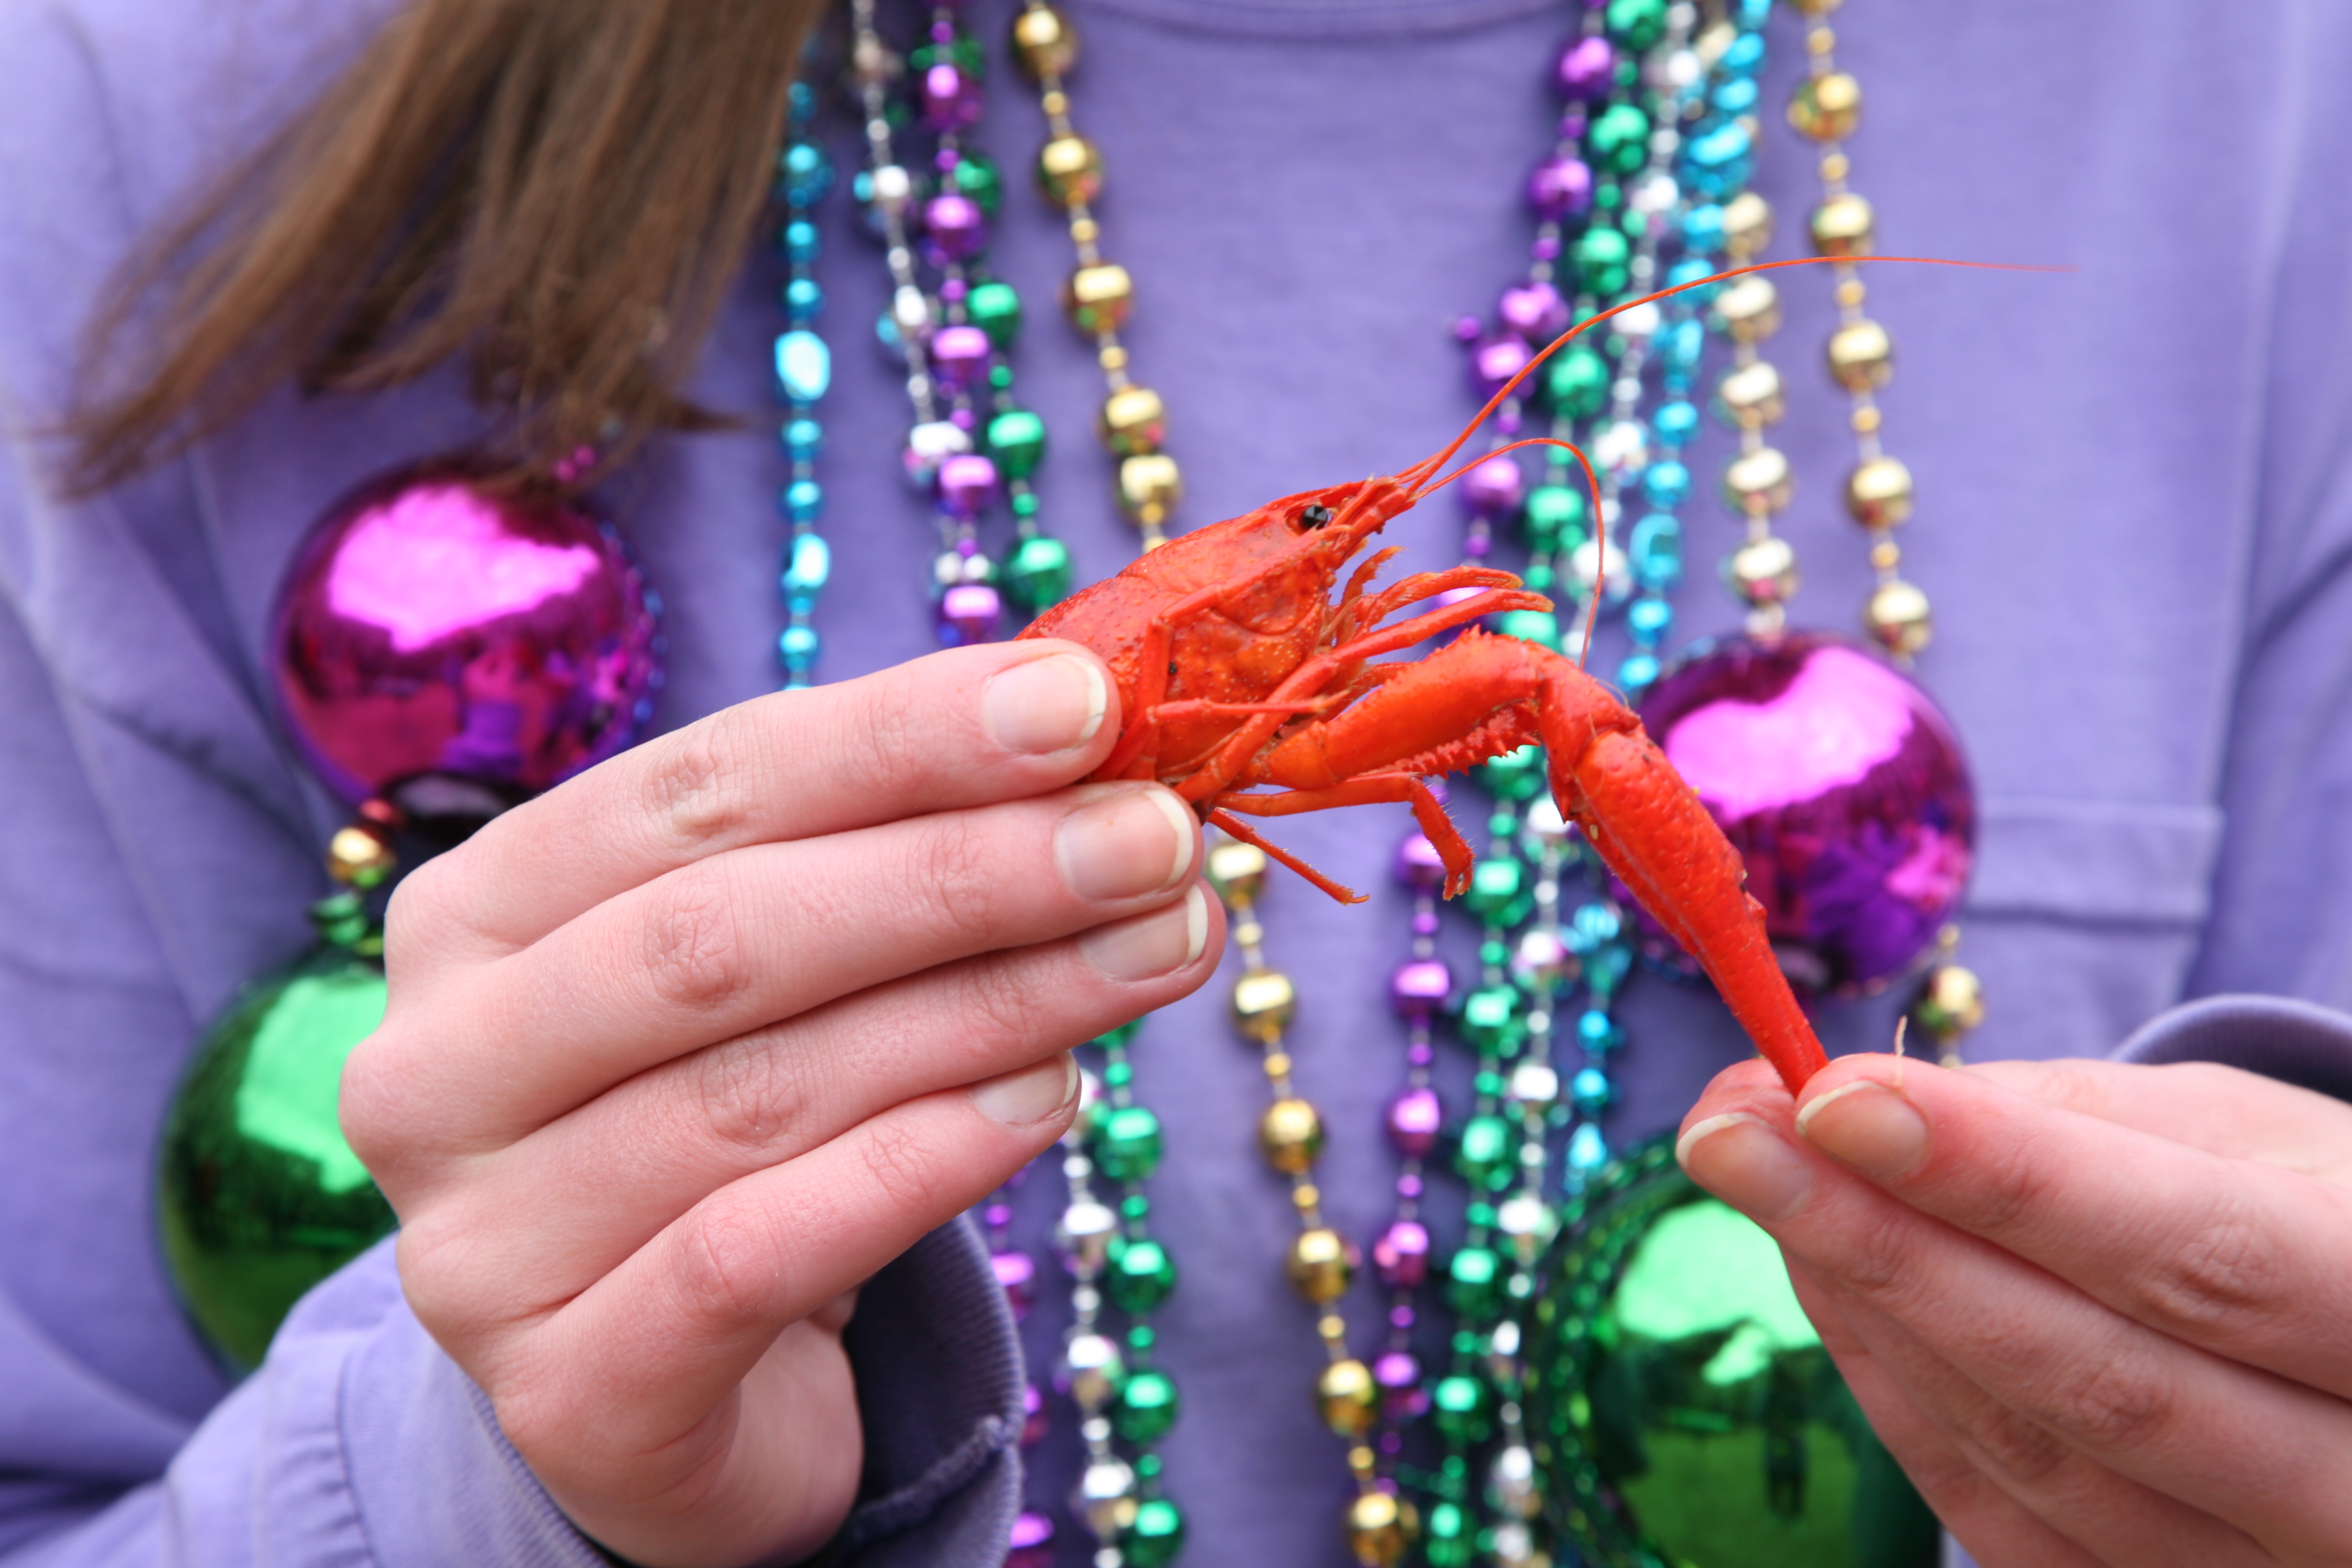 Student holding a crawfish